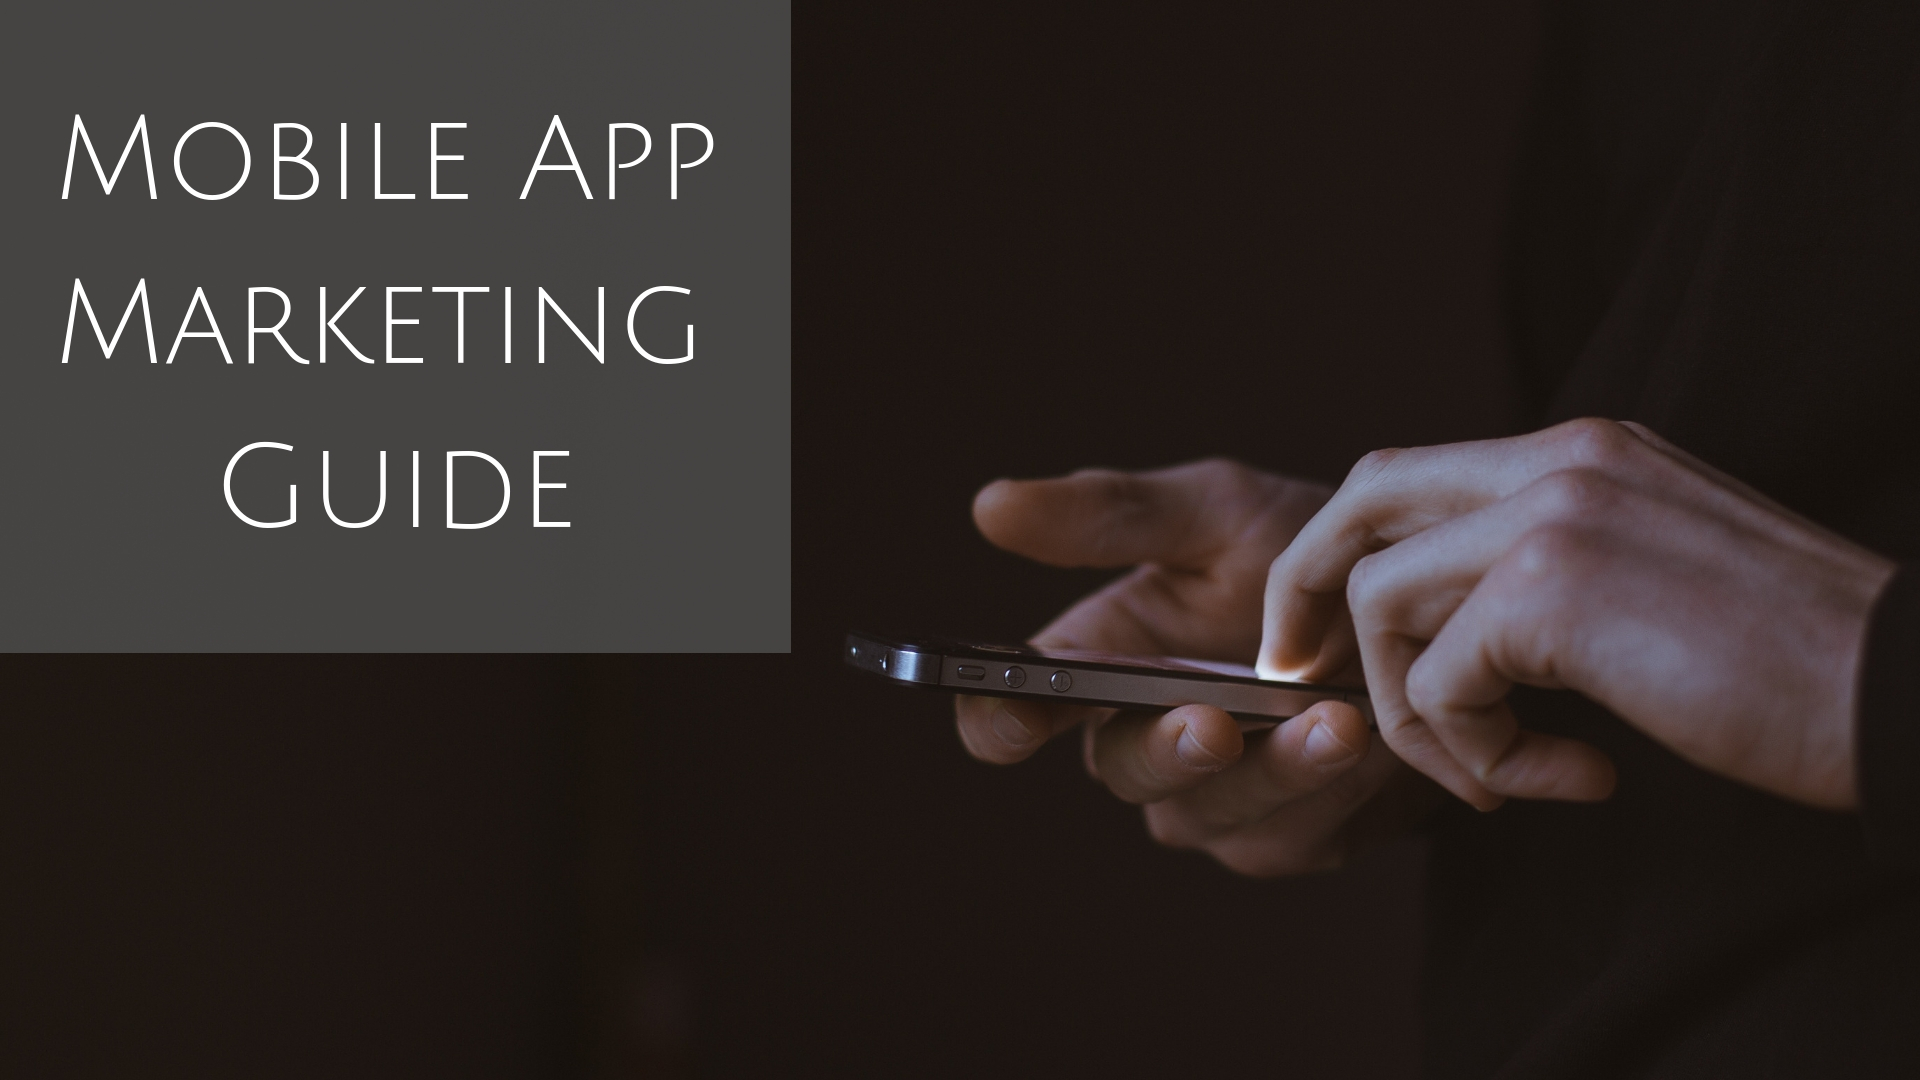 Mobile App Marketing Guide